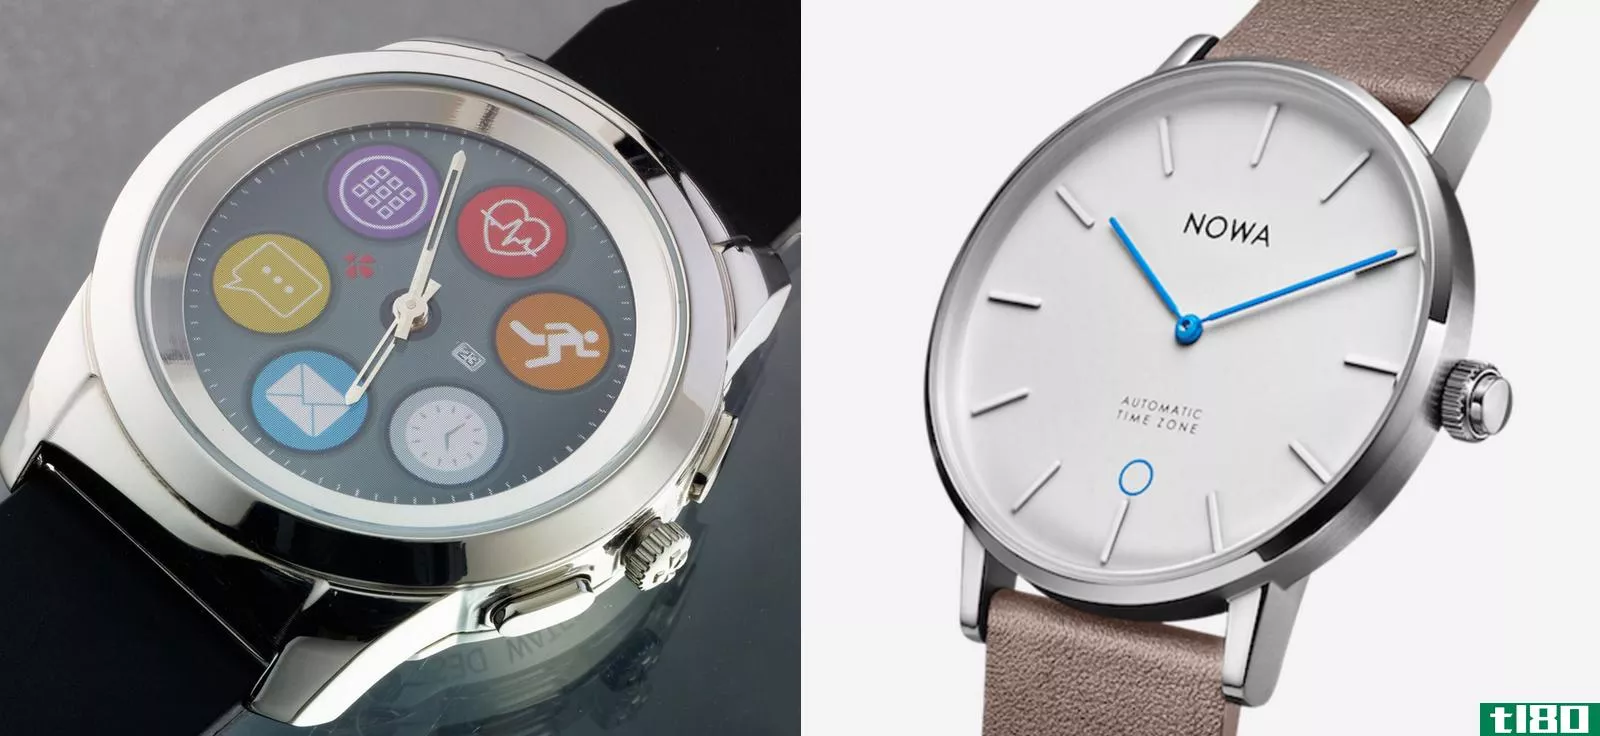 nowa塑造者和mykronoz zetime：两个智能手表启动者的故事